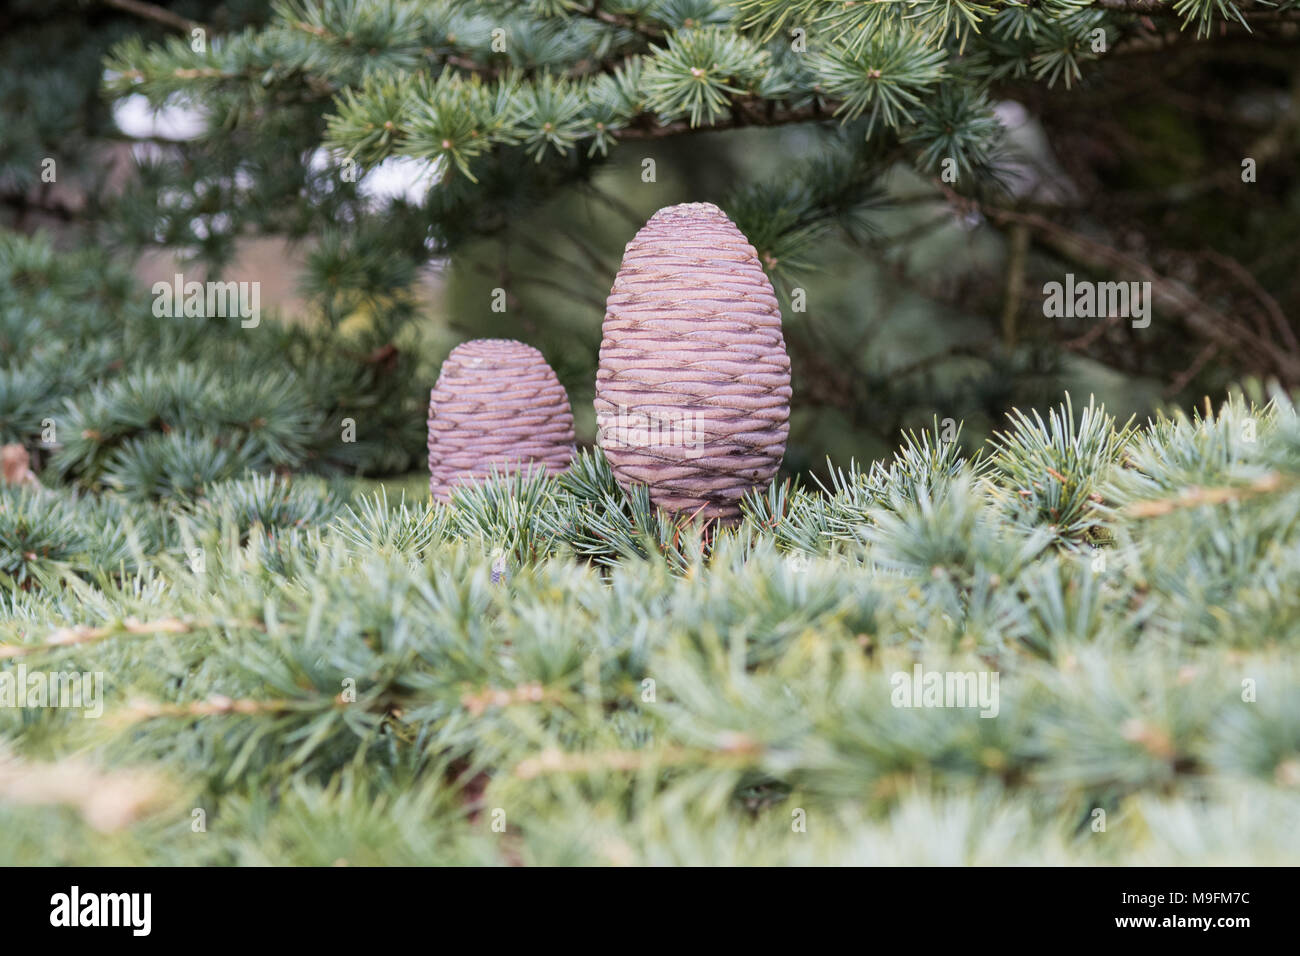 Cedar of Lebanon - Cedrus libani - cones Stock Photo